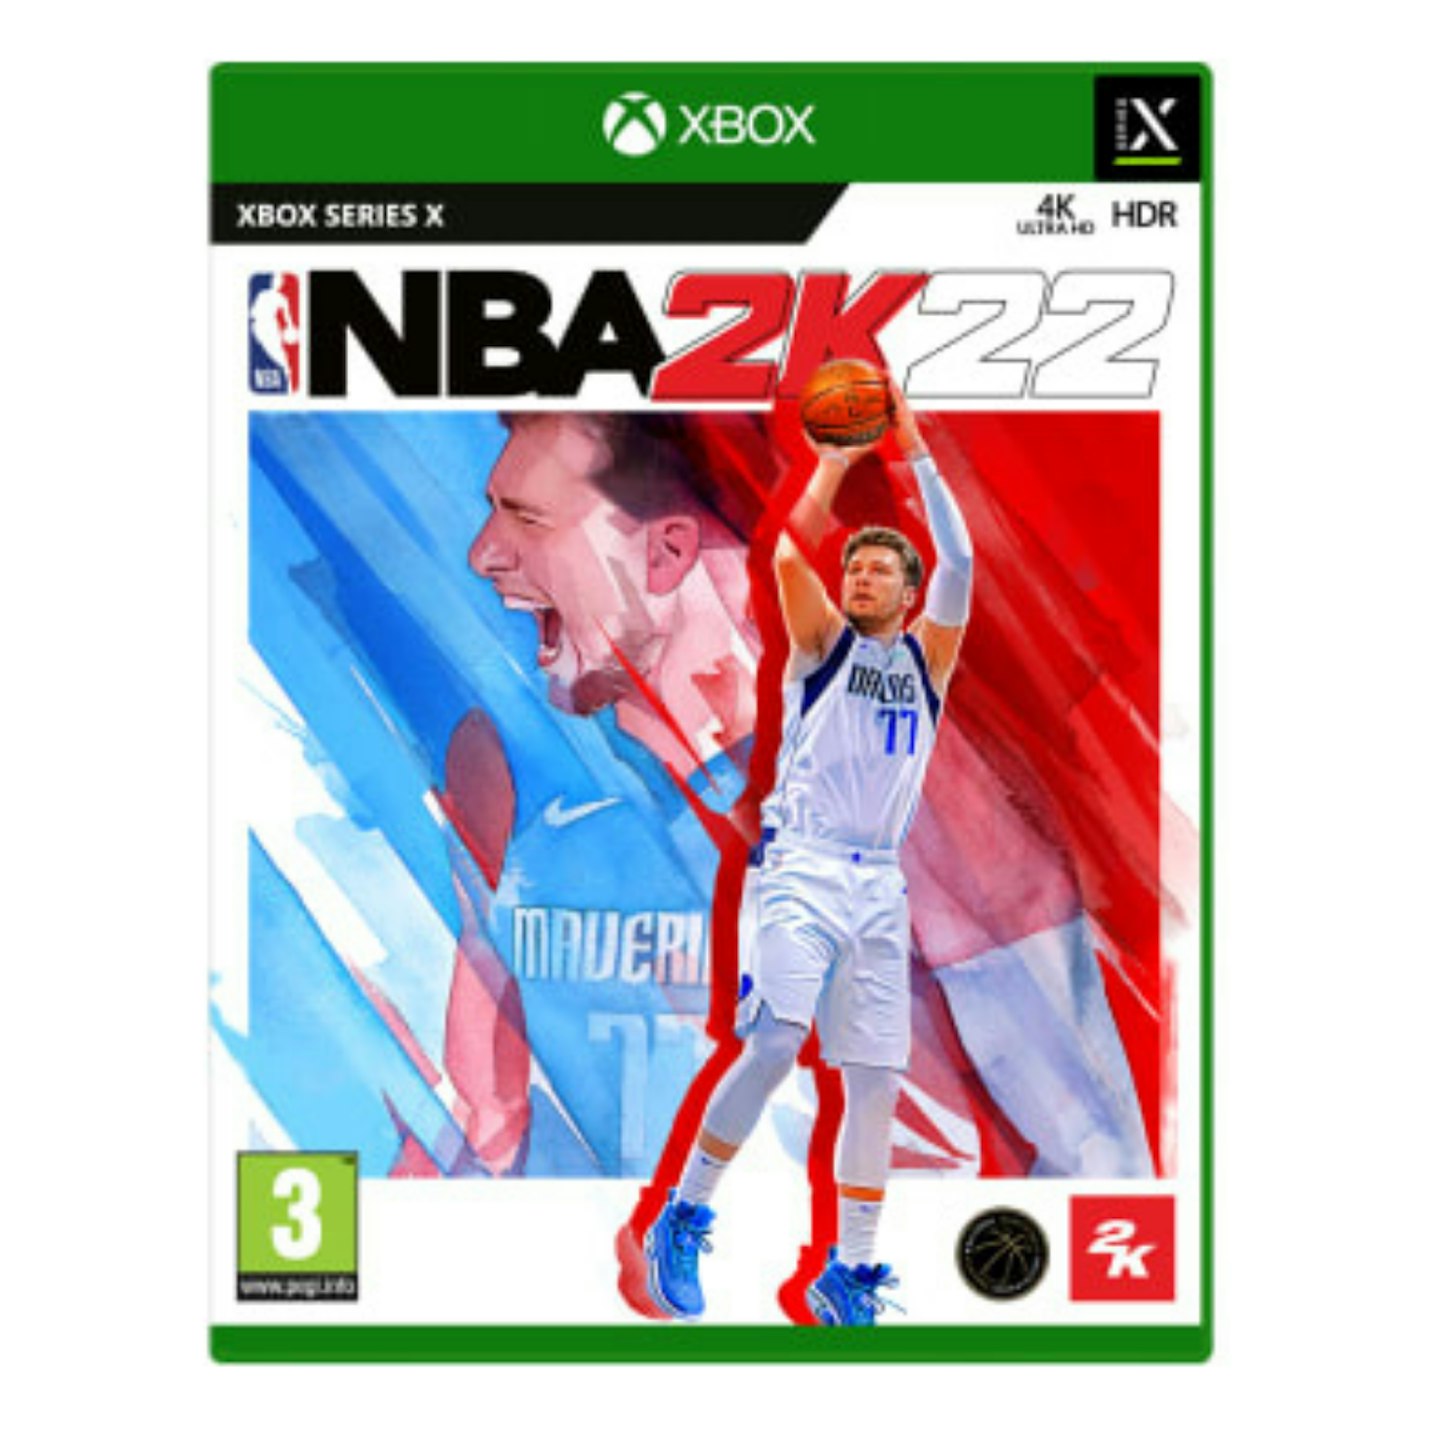 NBA 2K22 With GAME Exclusive Pre-order Bonuses - Xbox Series X